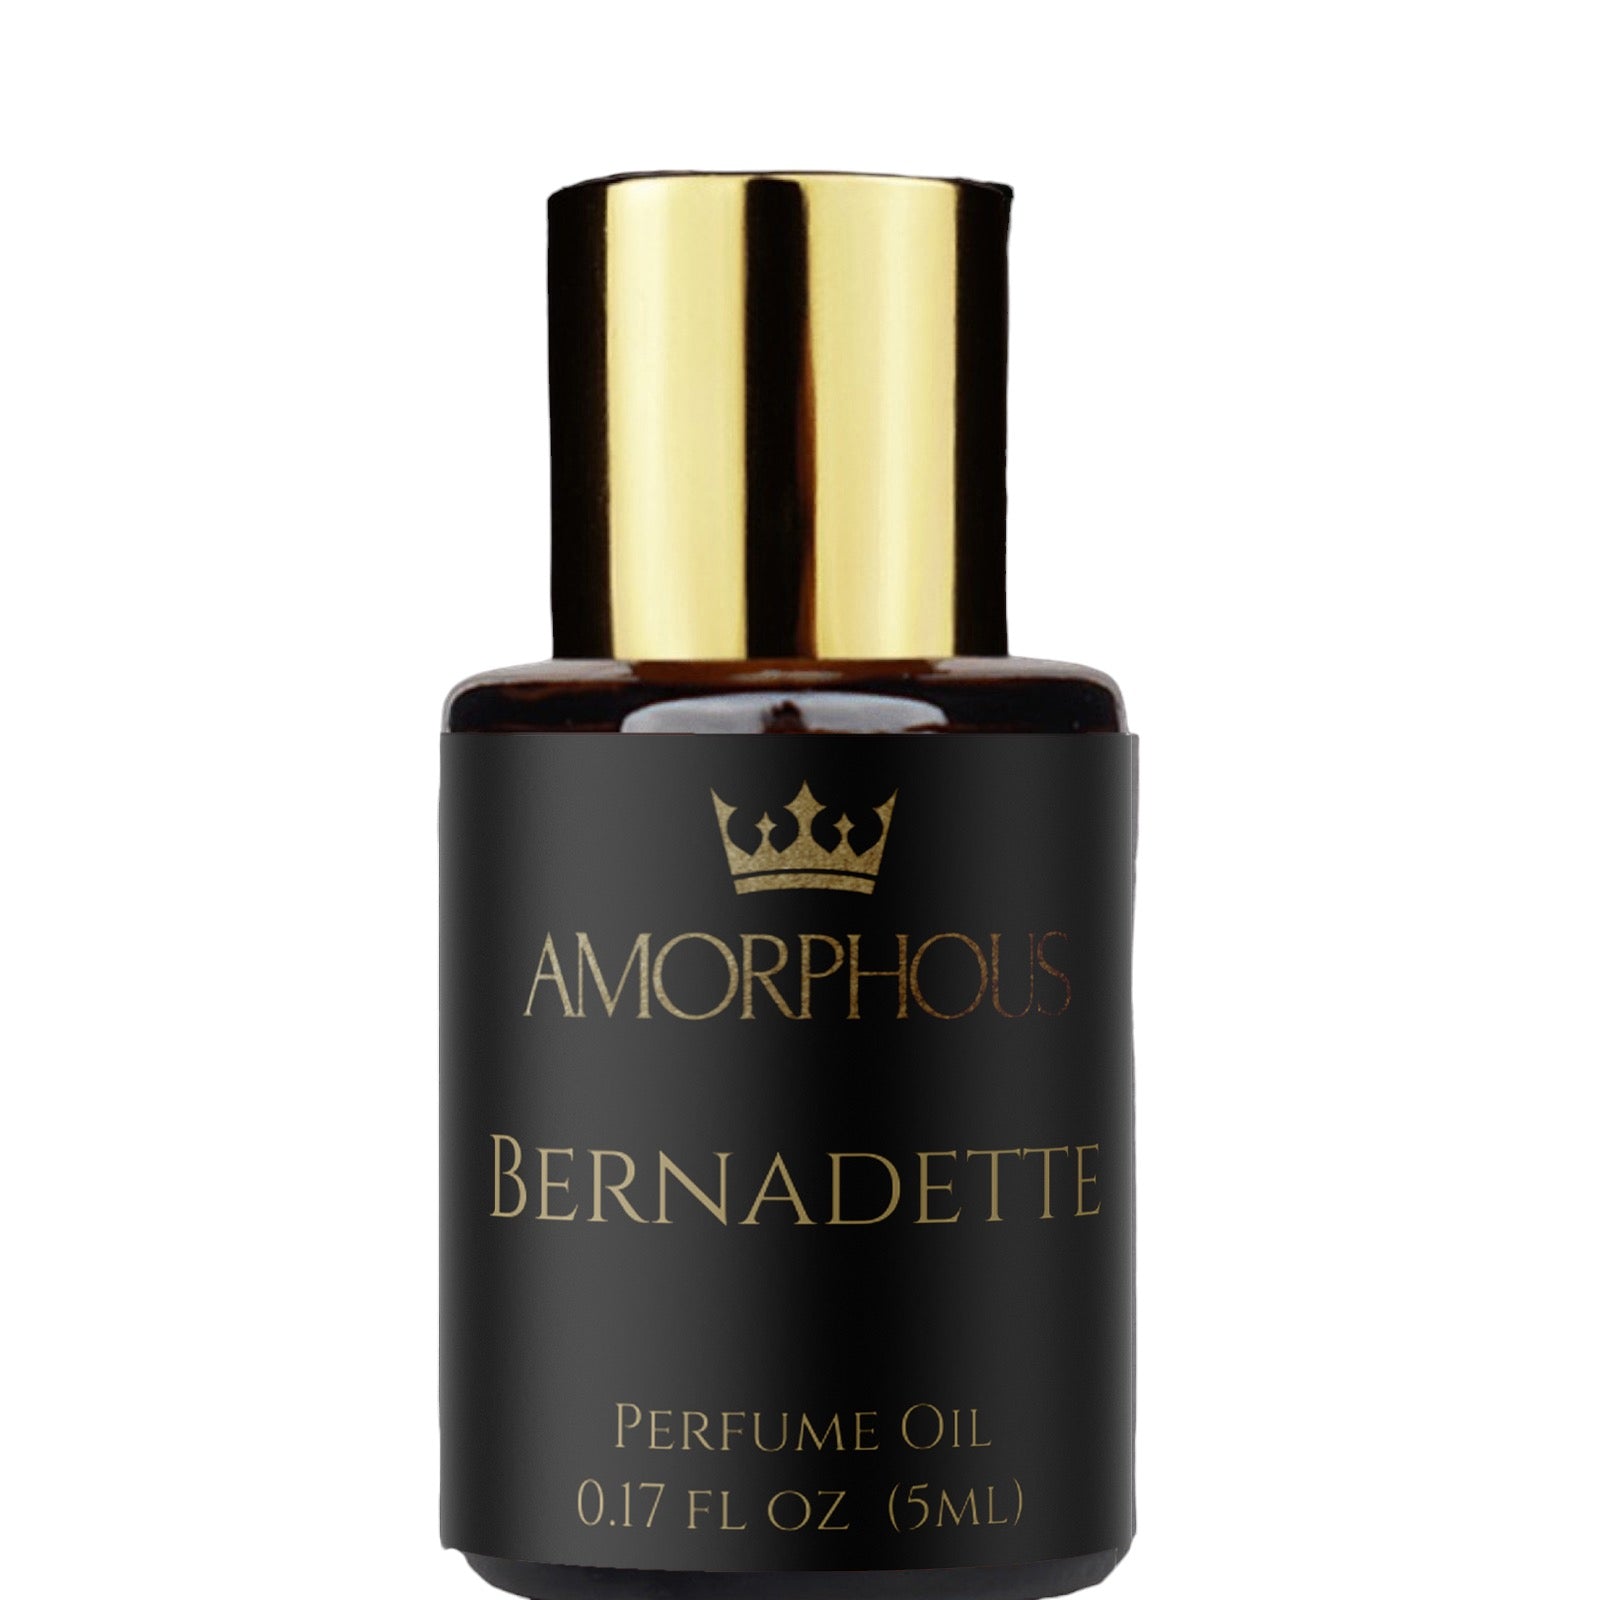 Bernadette perfume